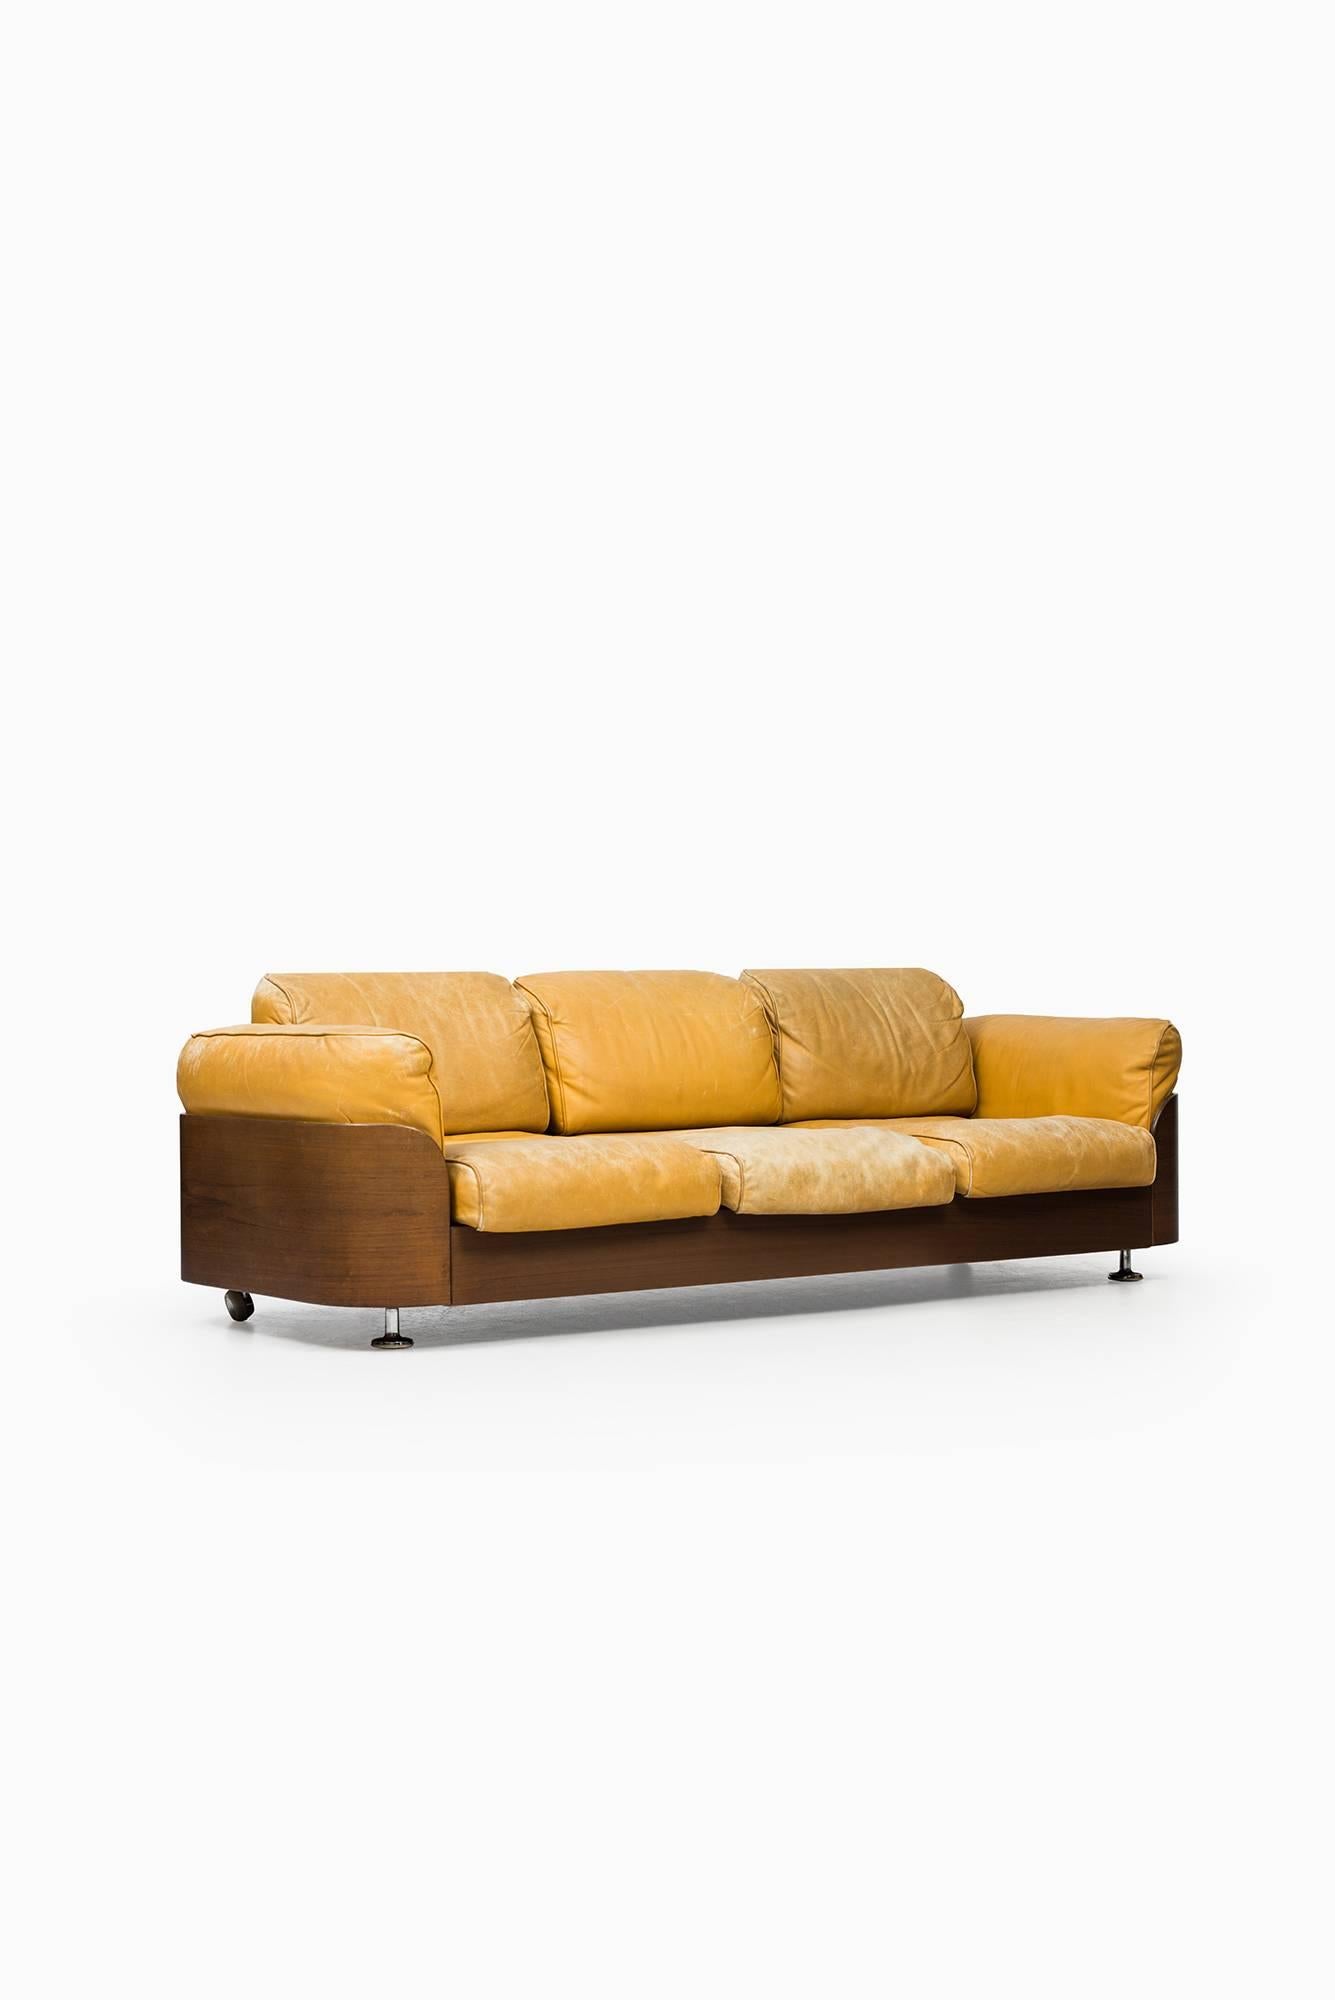 Scandinavian Modern Rare Three-Seat Sofa Produced by Hämeen Kalustaja in Finland